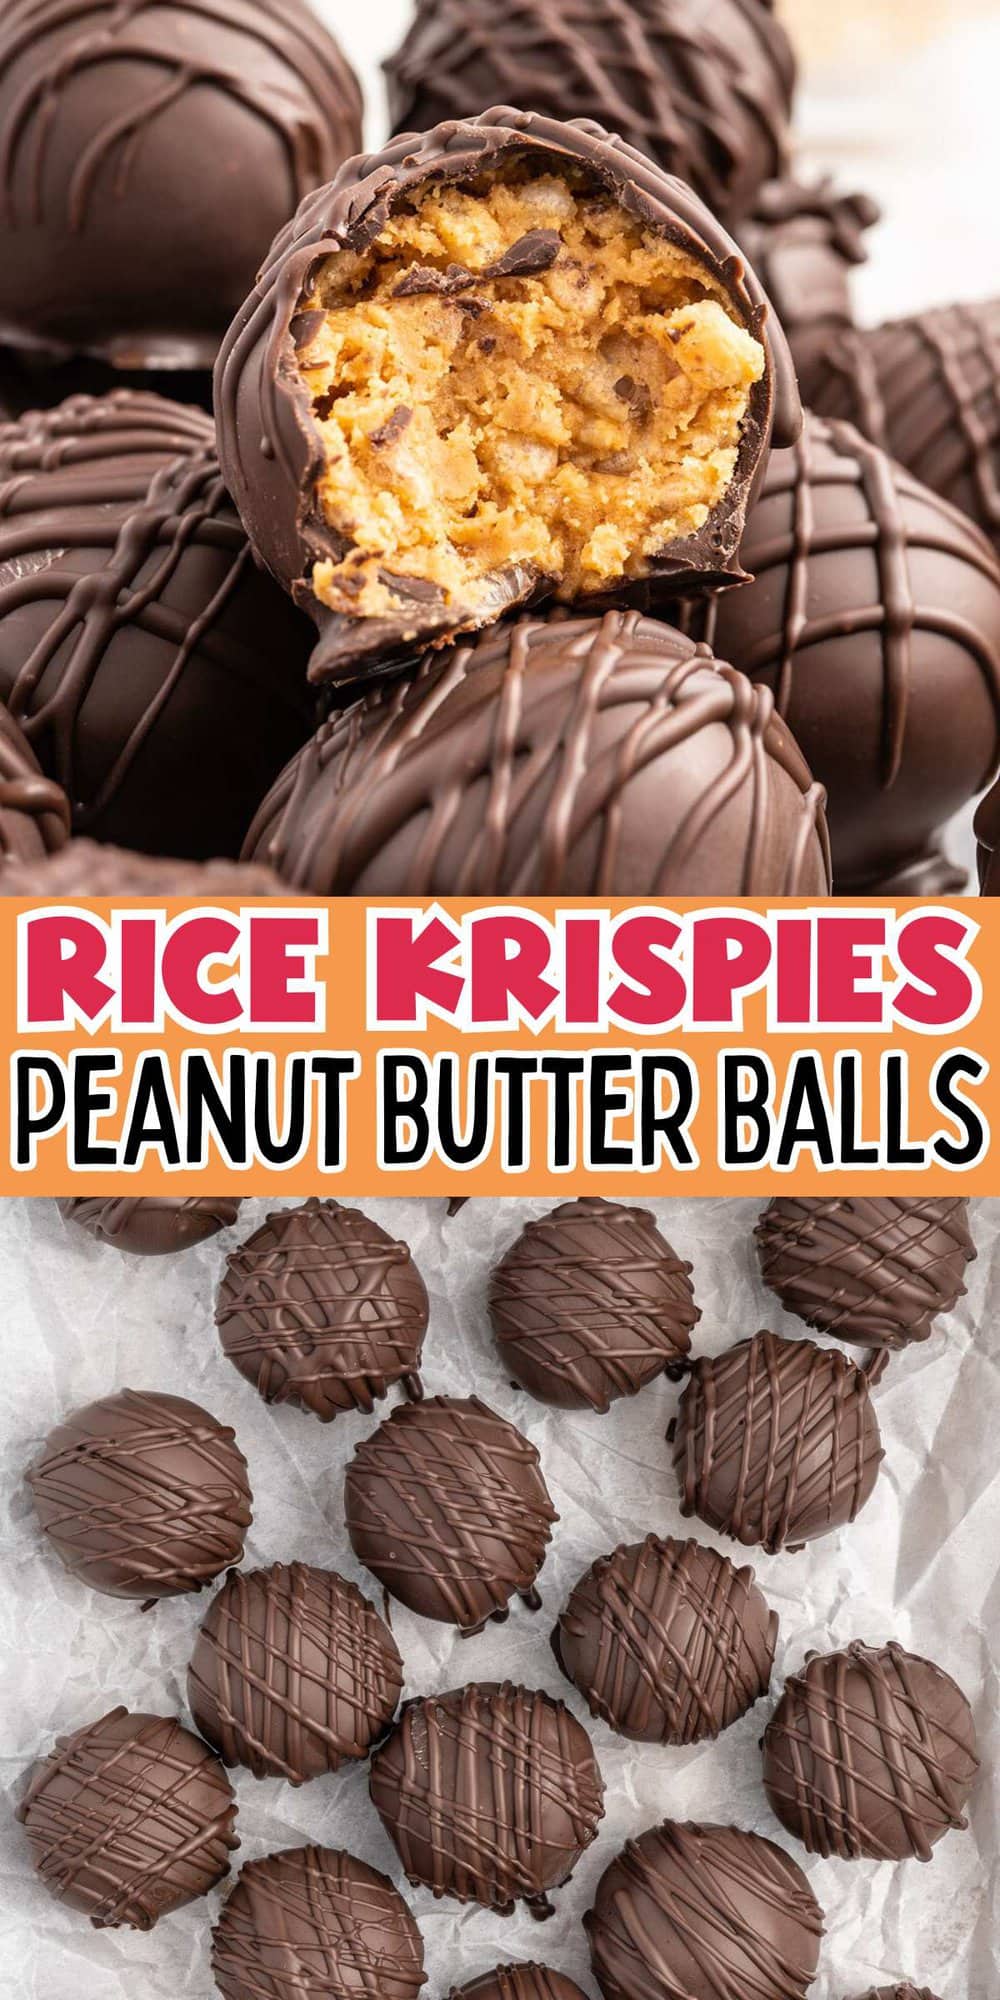 Peanut Butter Balls with Rice Krispies pinterest